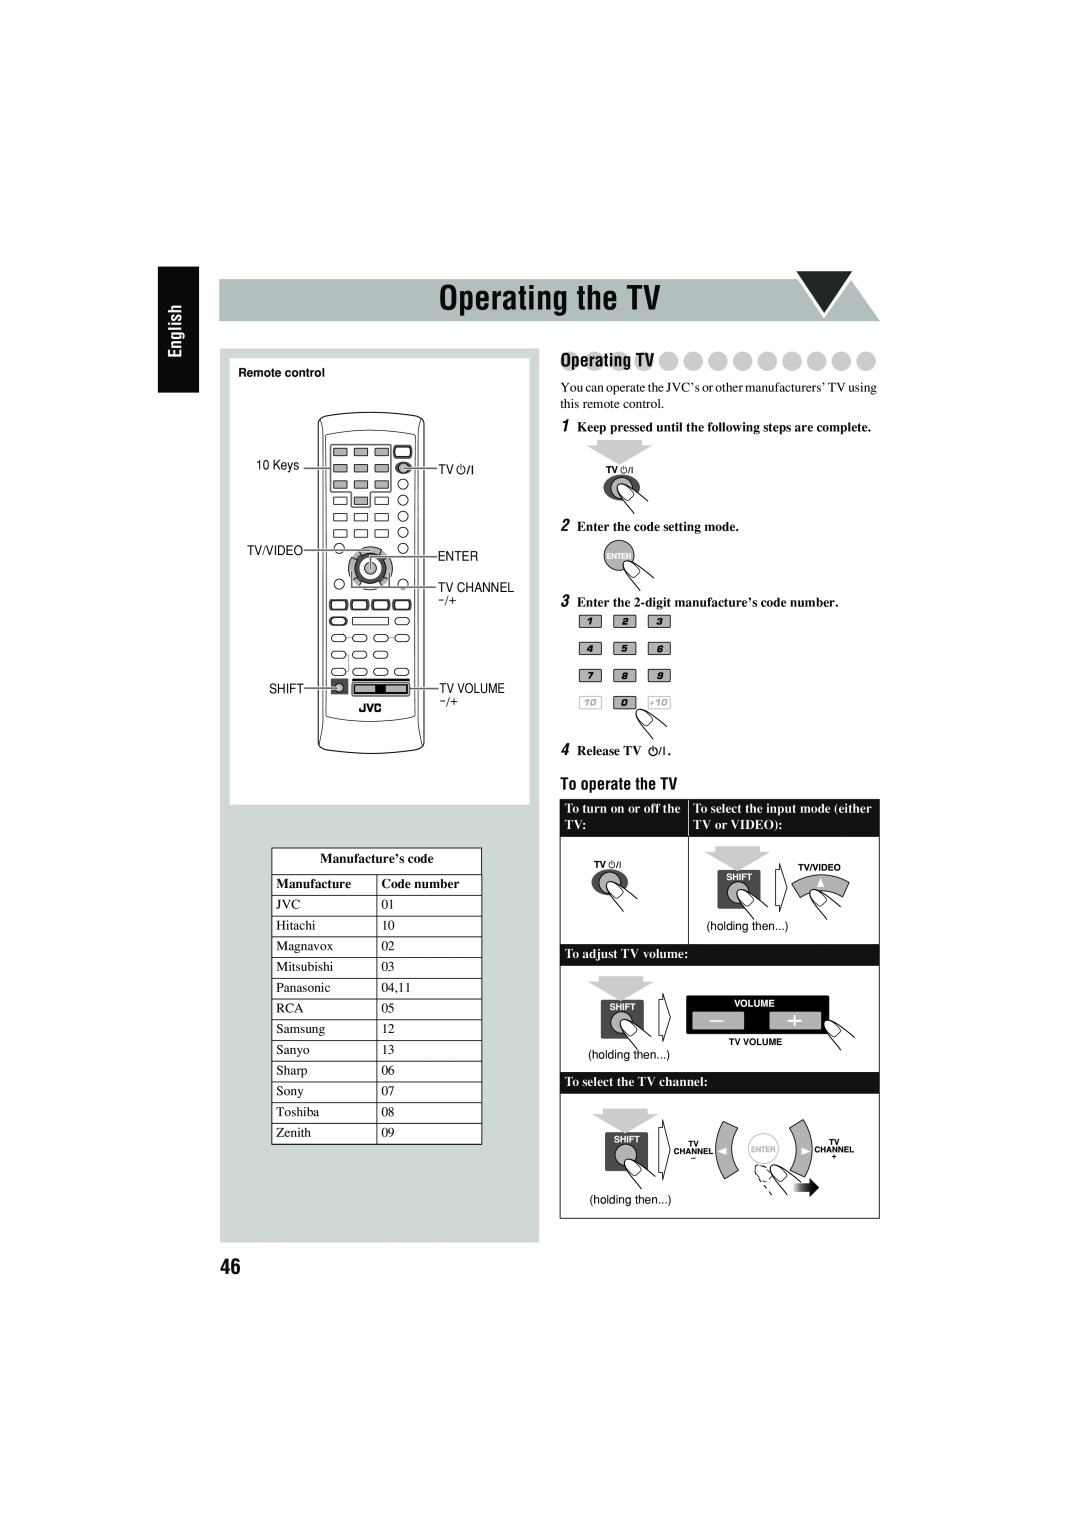 JVC CA-MXJD8 manual Operating the TV, English, Operating TV, To operate the TV, Manufacture’s code, Code number 